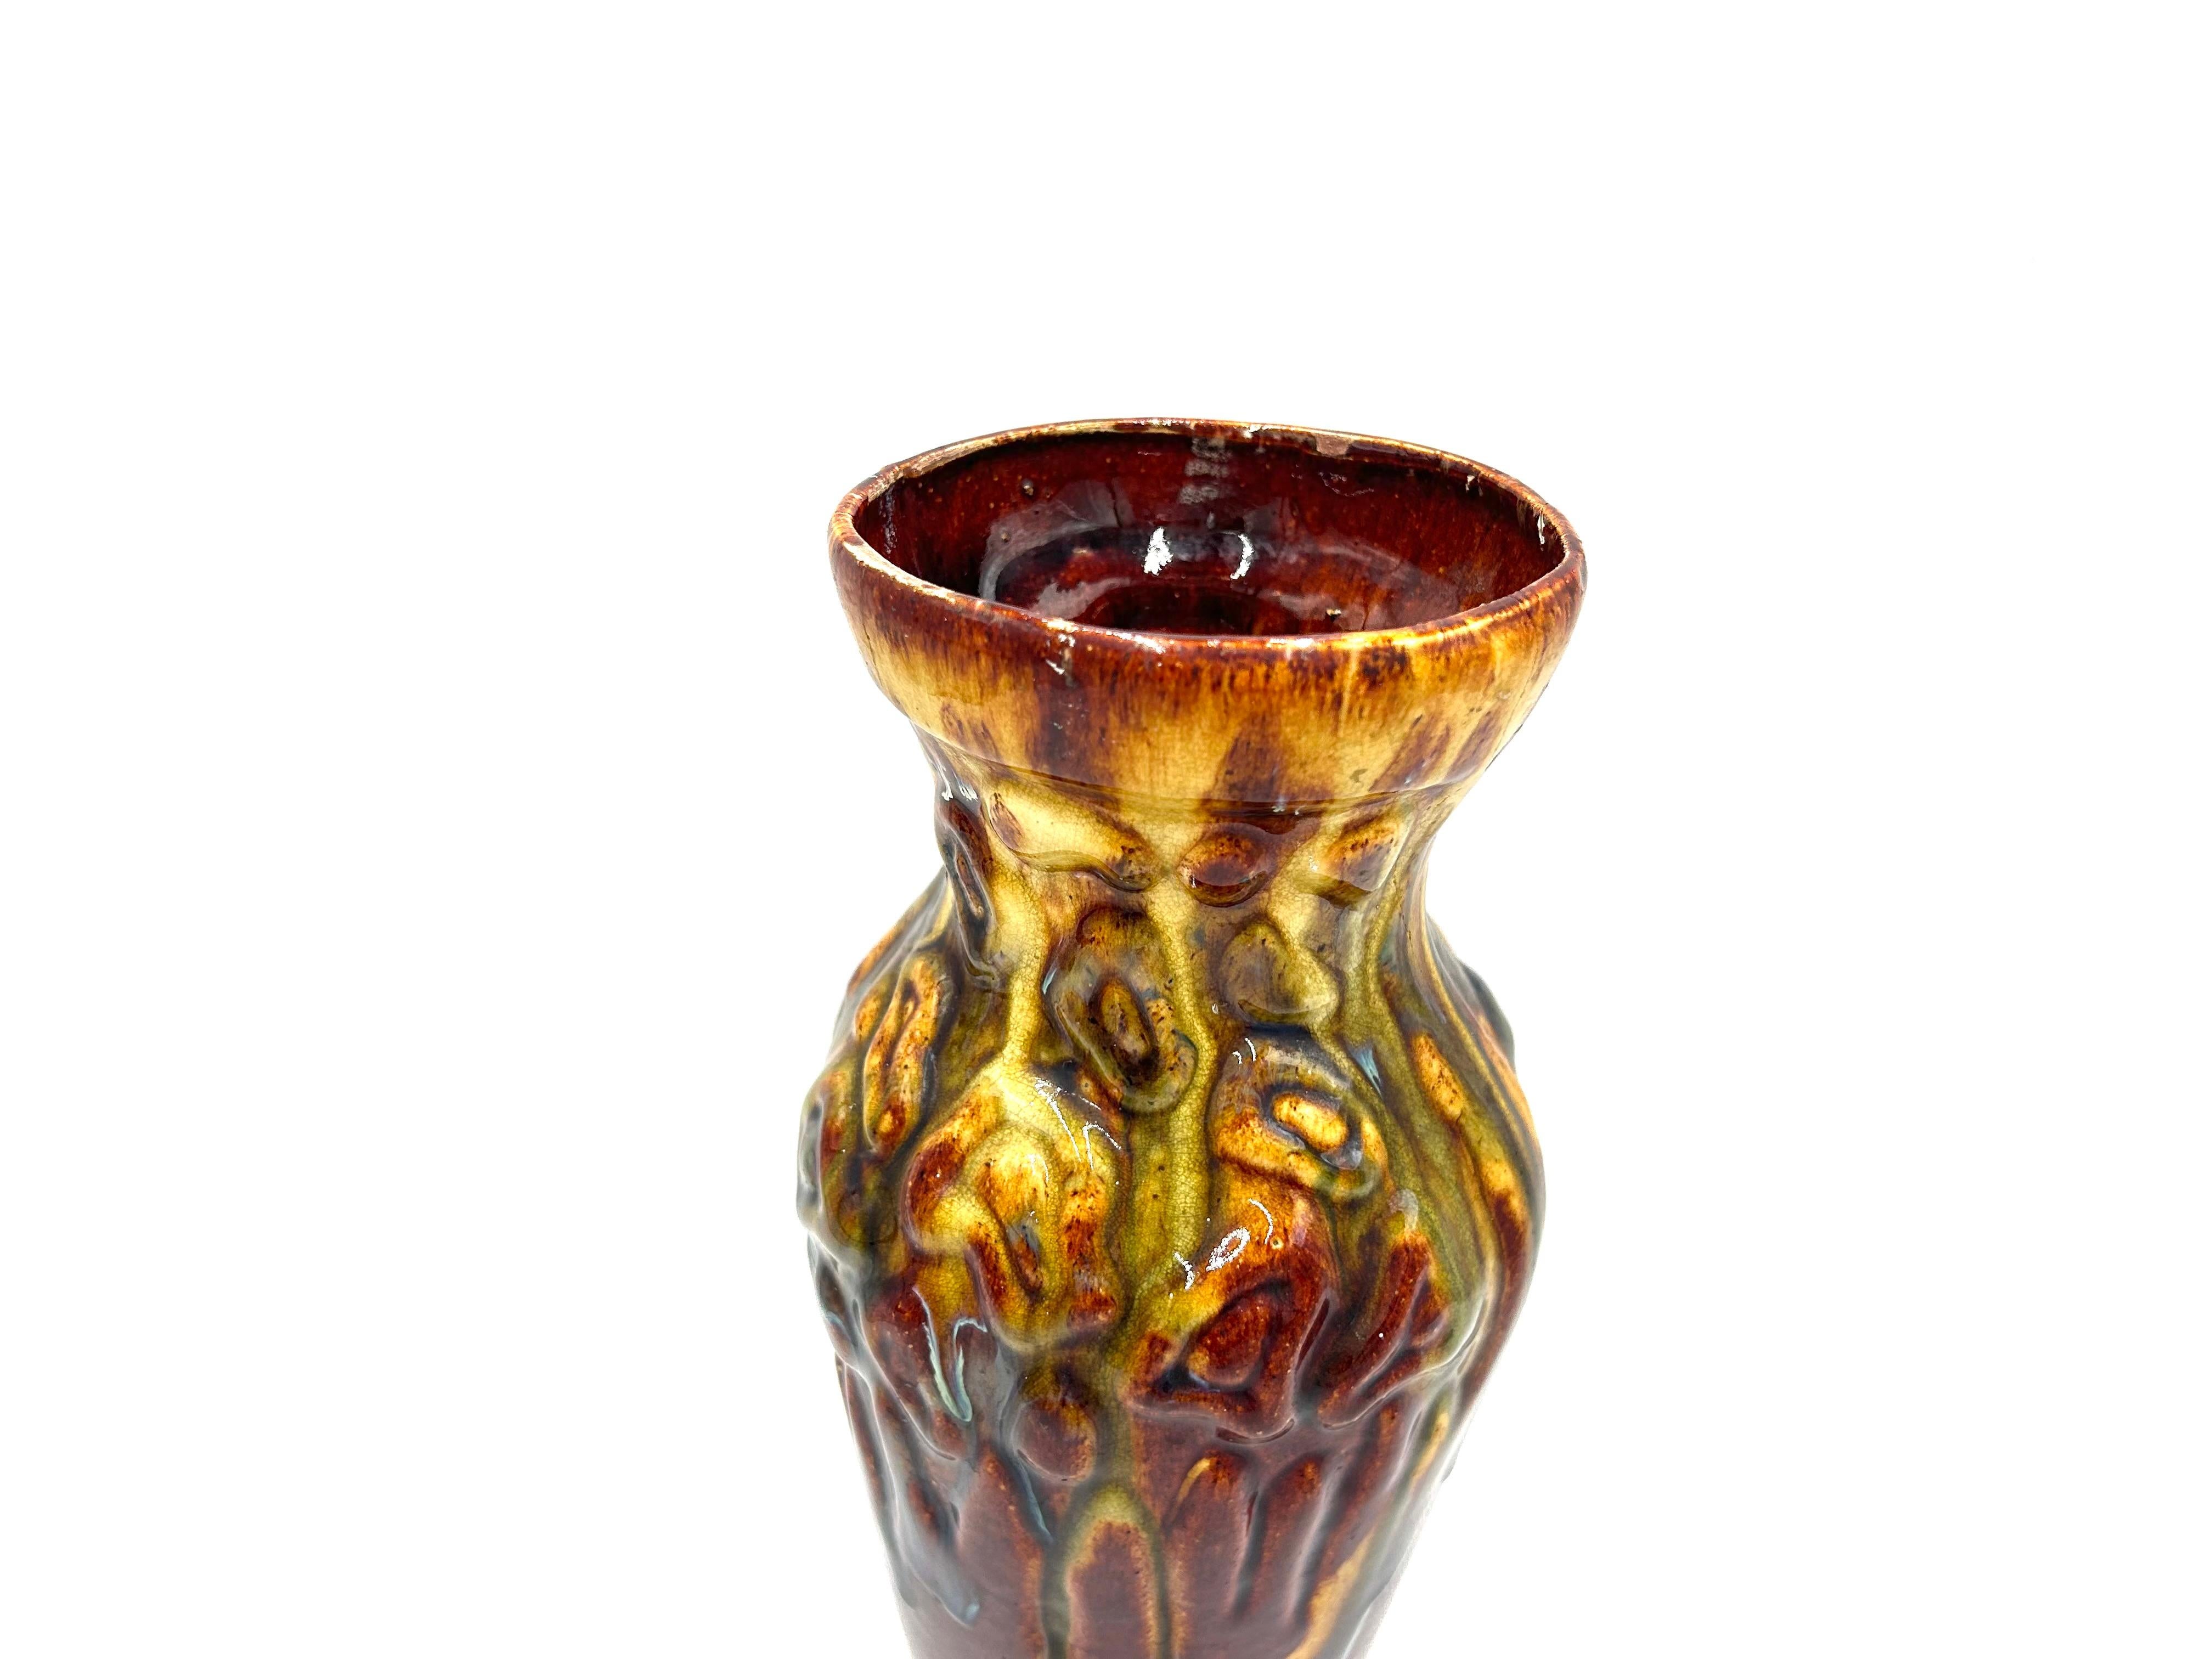 Polish Midcentury Stoneware Vase from 1950s For Sale